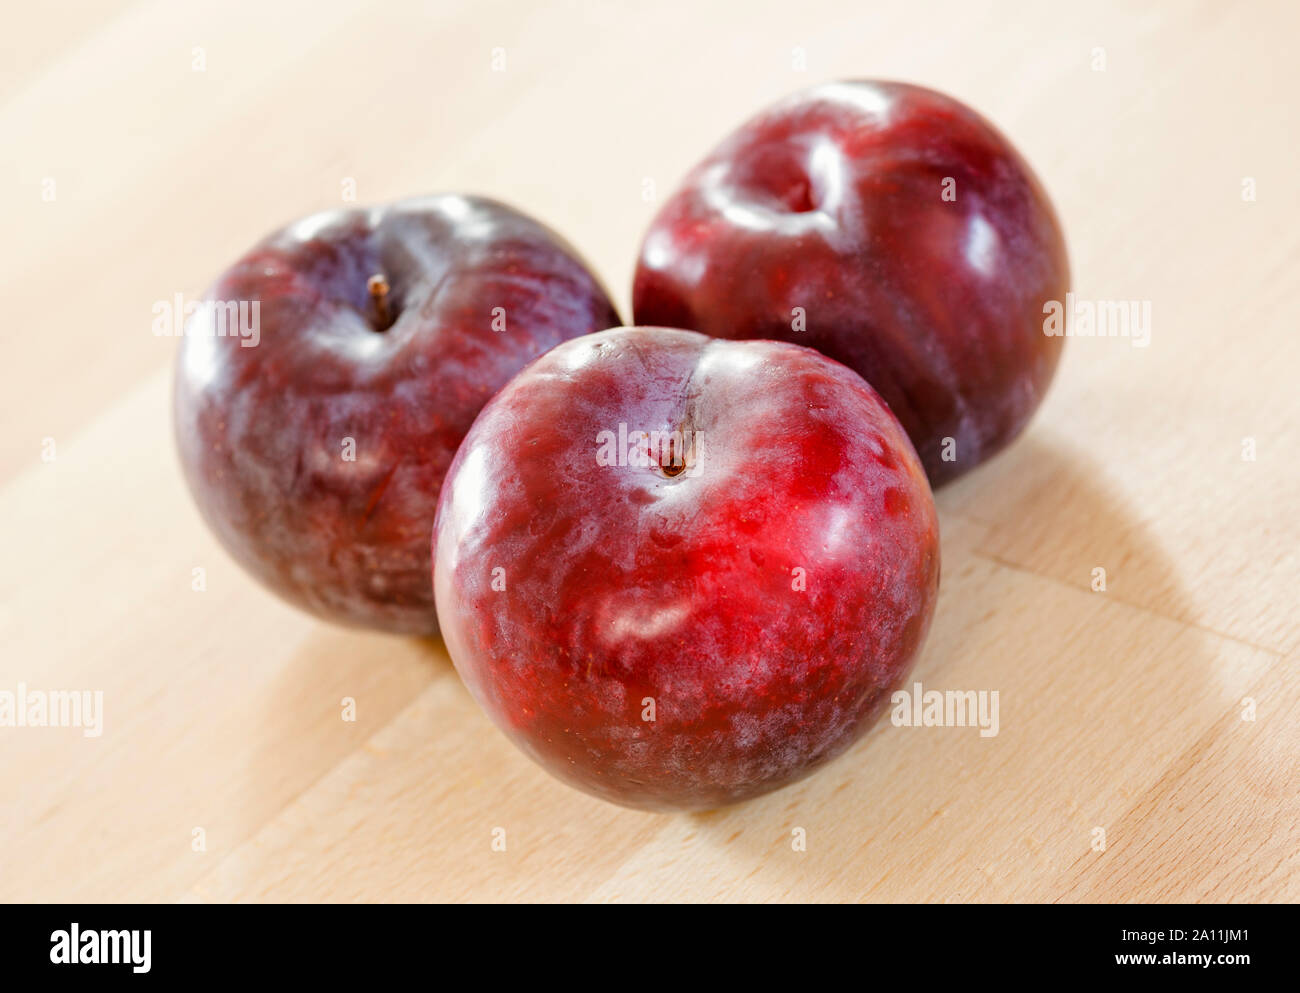 Trois prunes on a wooden surface Banque D'Images